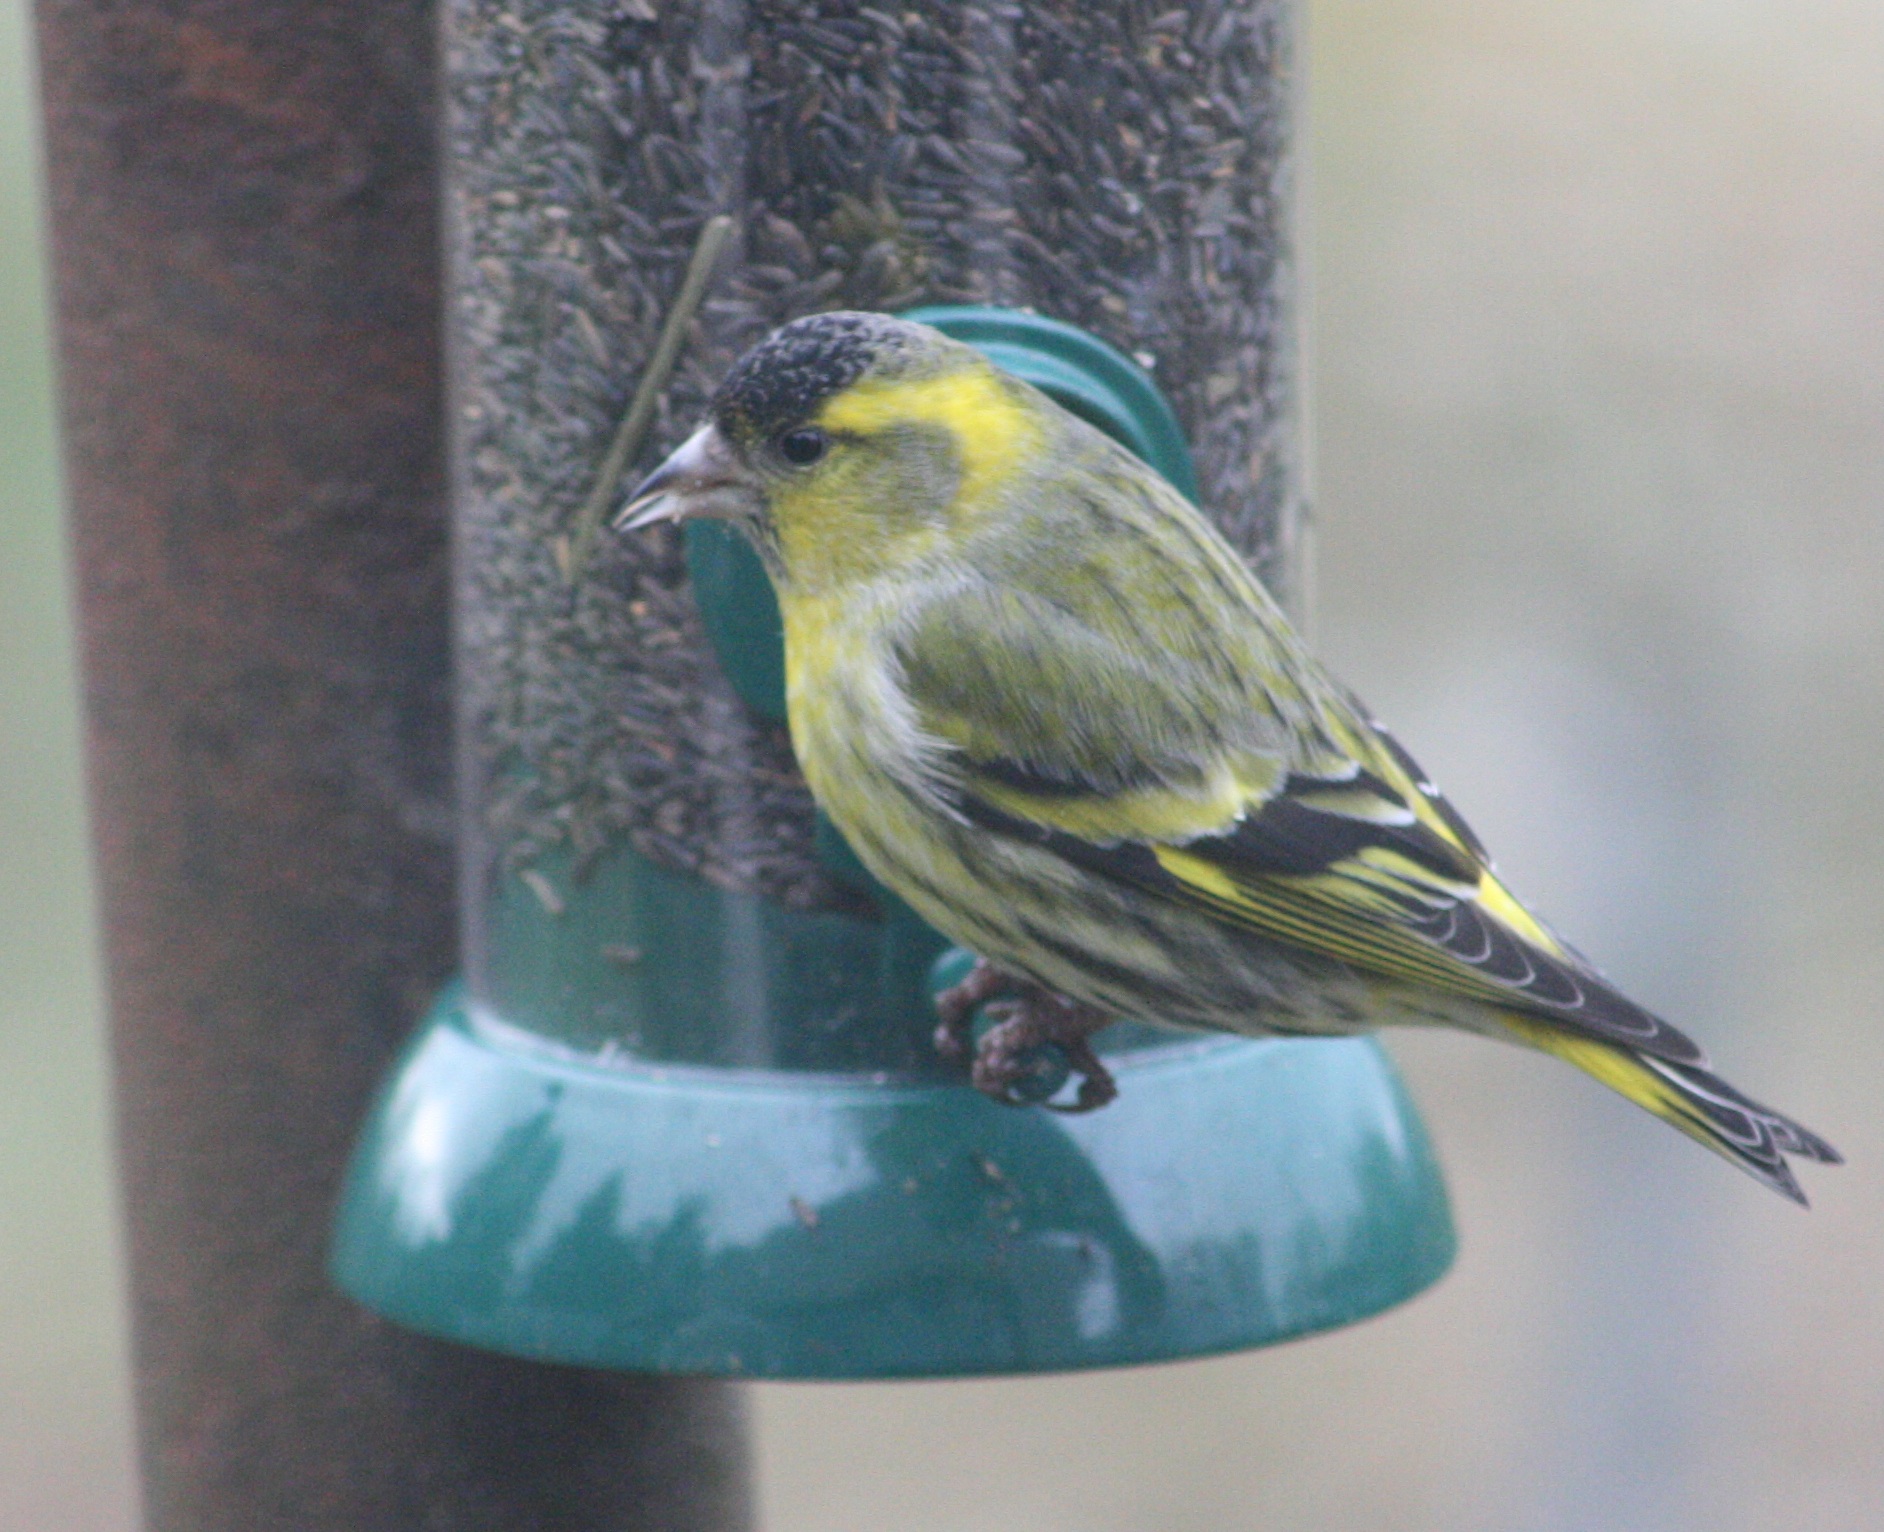 a yellow and grey bird standing on a bird feeder